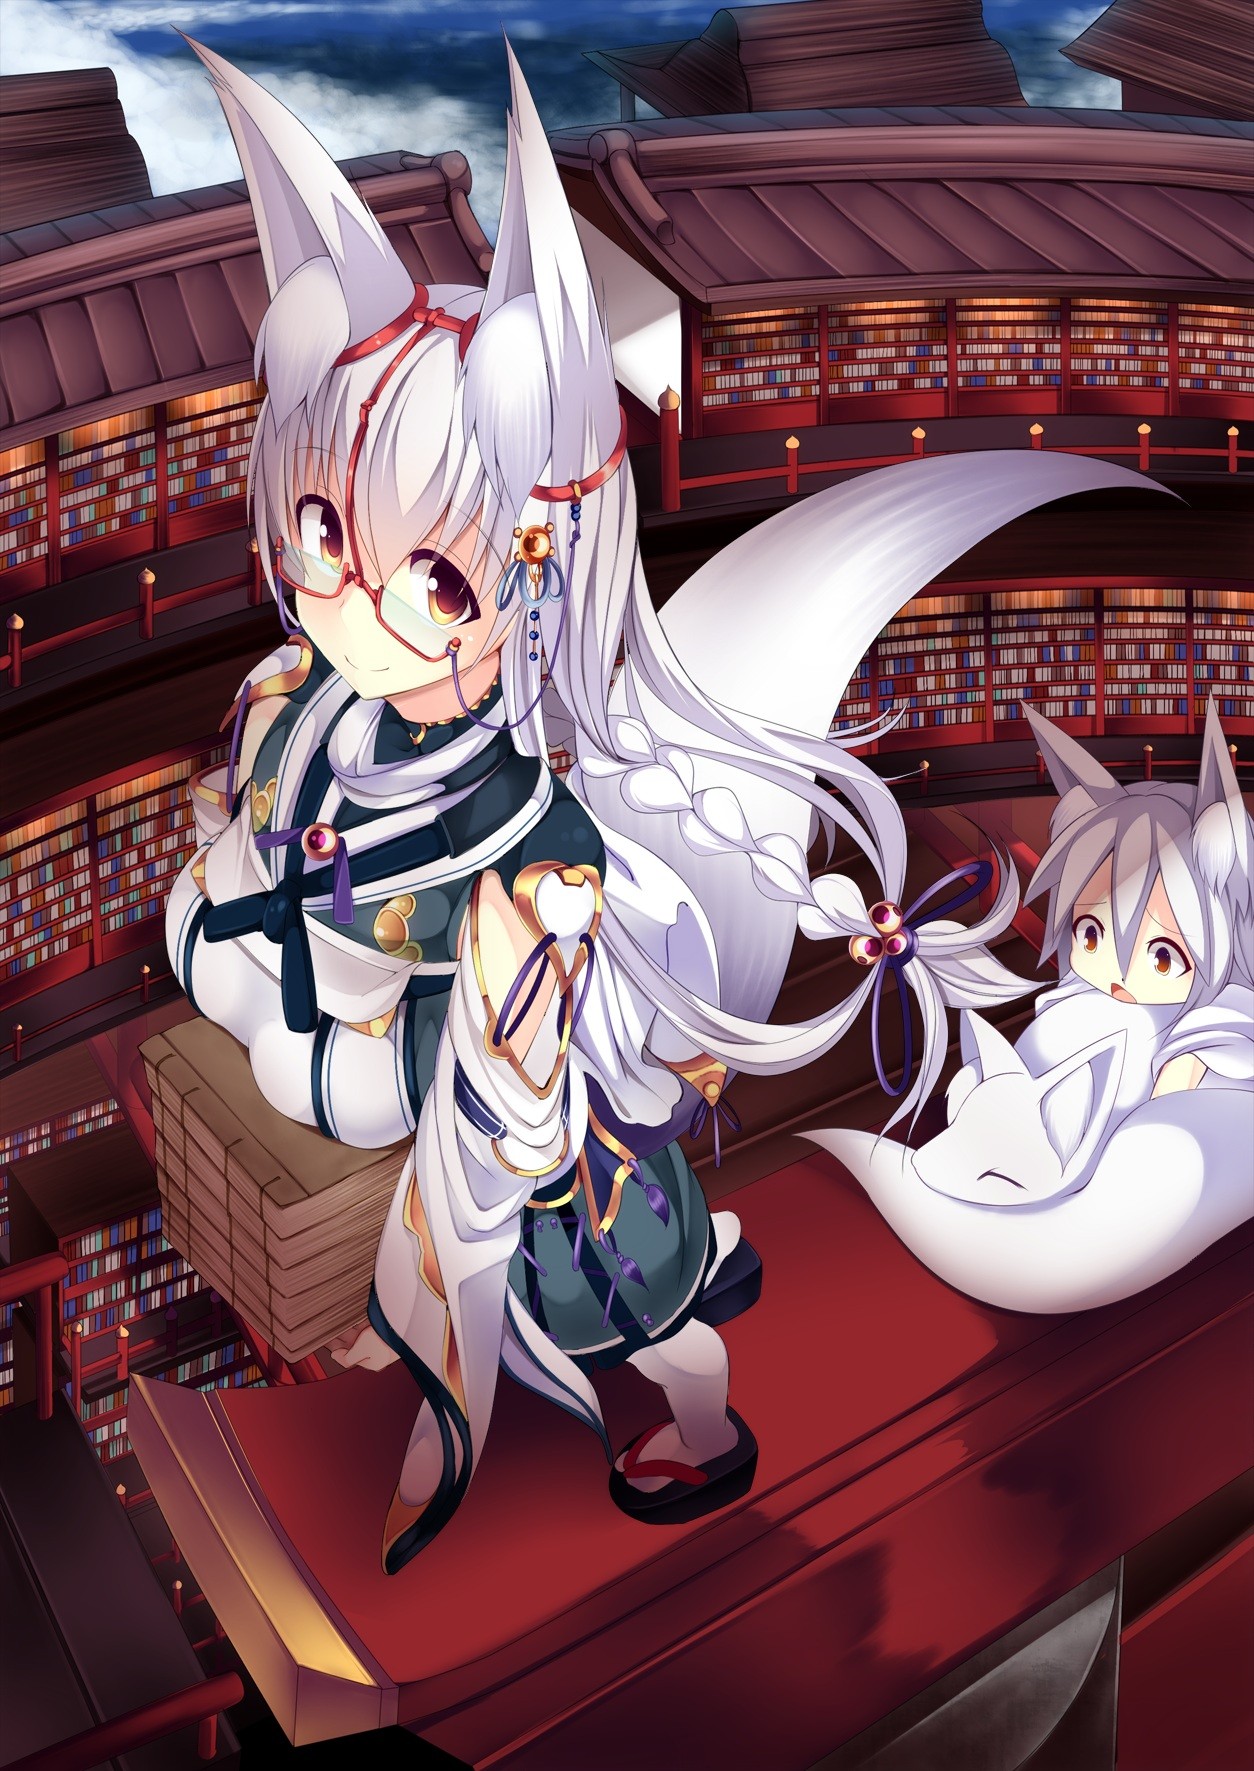 Anime 1254x1771 anime anime girls animal ears tail library fox girl original characters women with glasses long hair